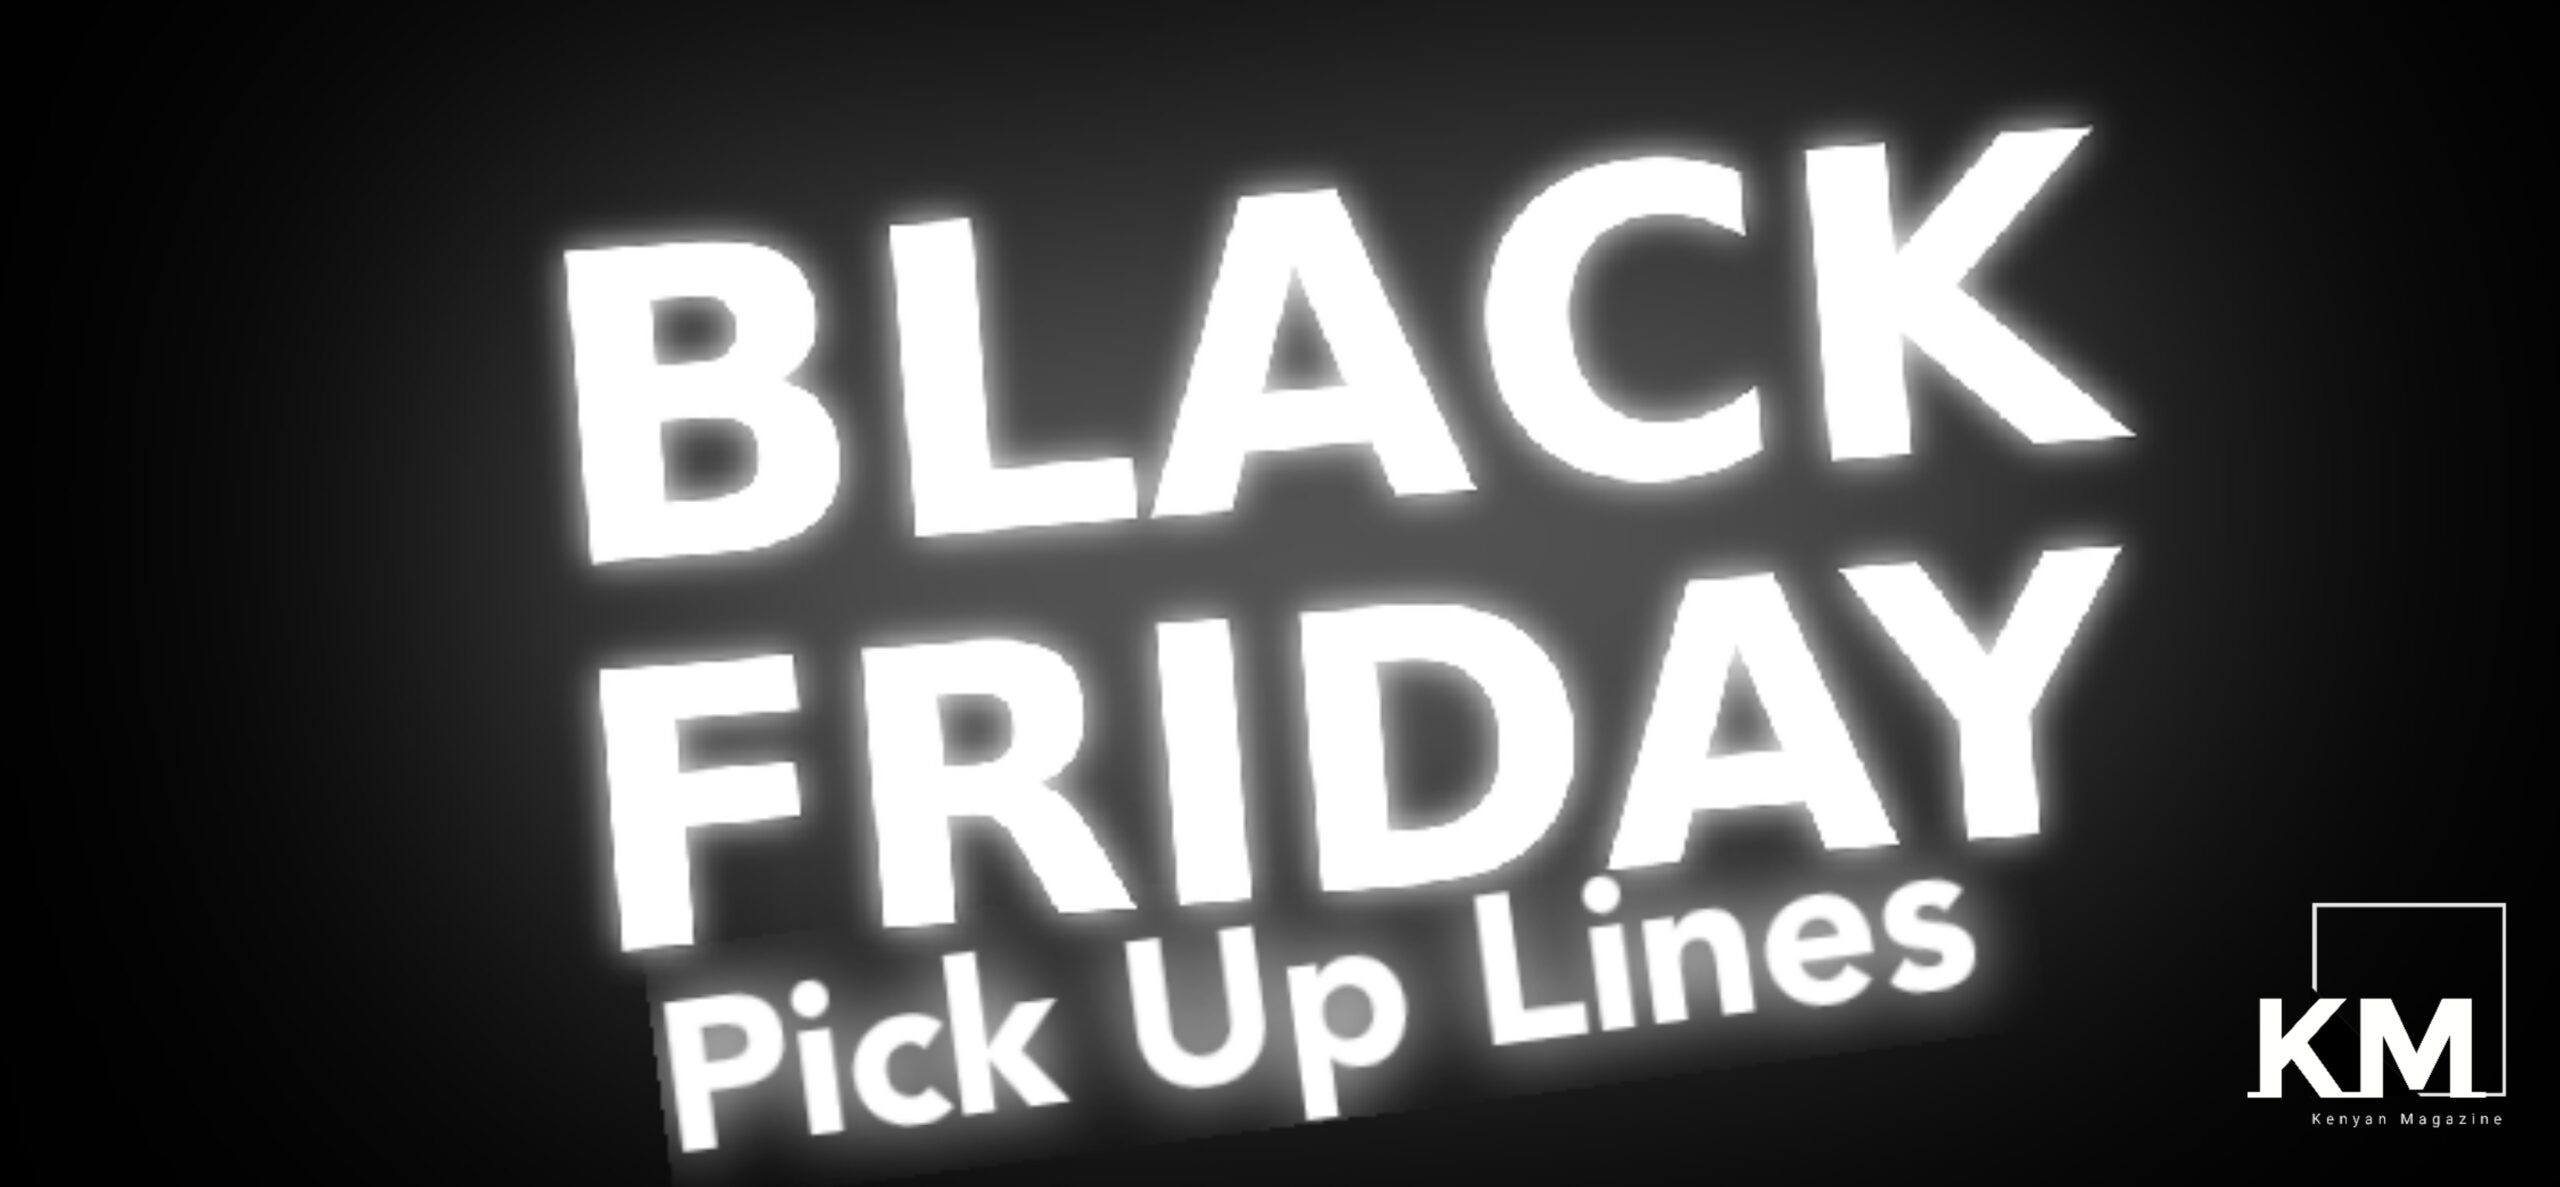 Black Friday Pick Up Lines